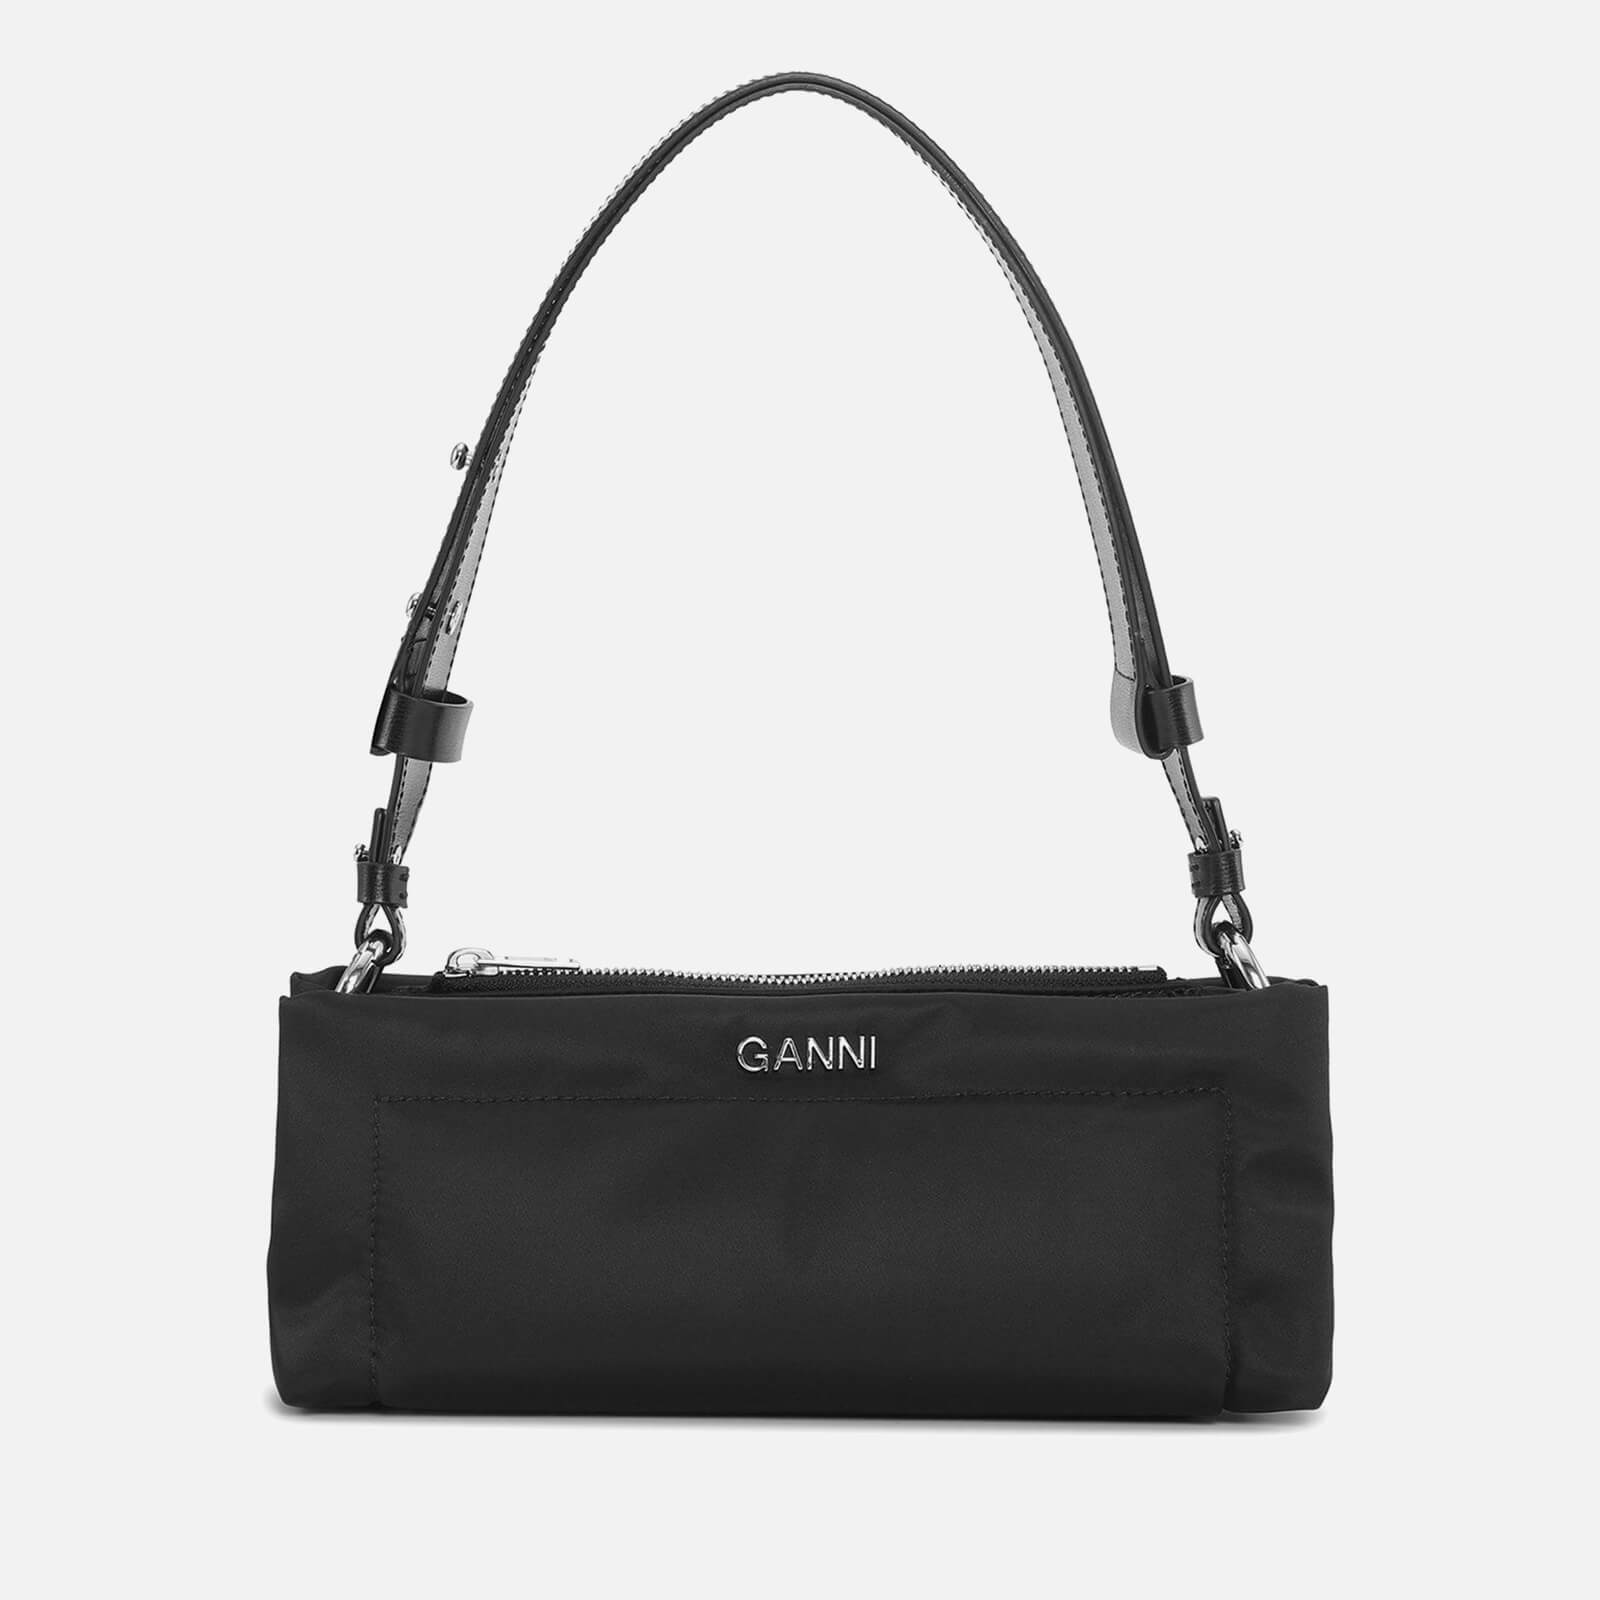 Ganni Women's Pillow Baguette Bag - Black